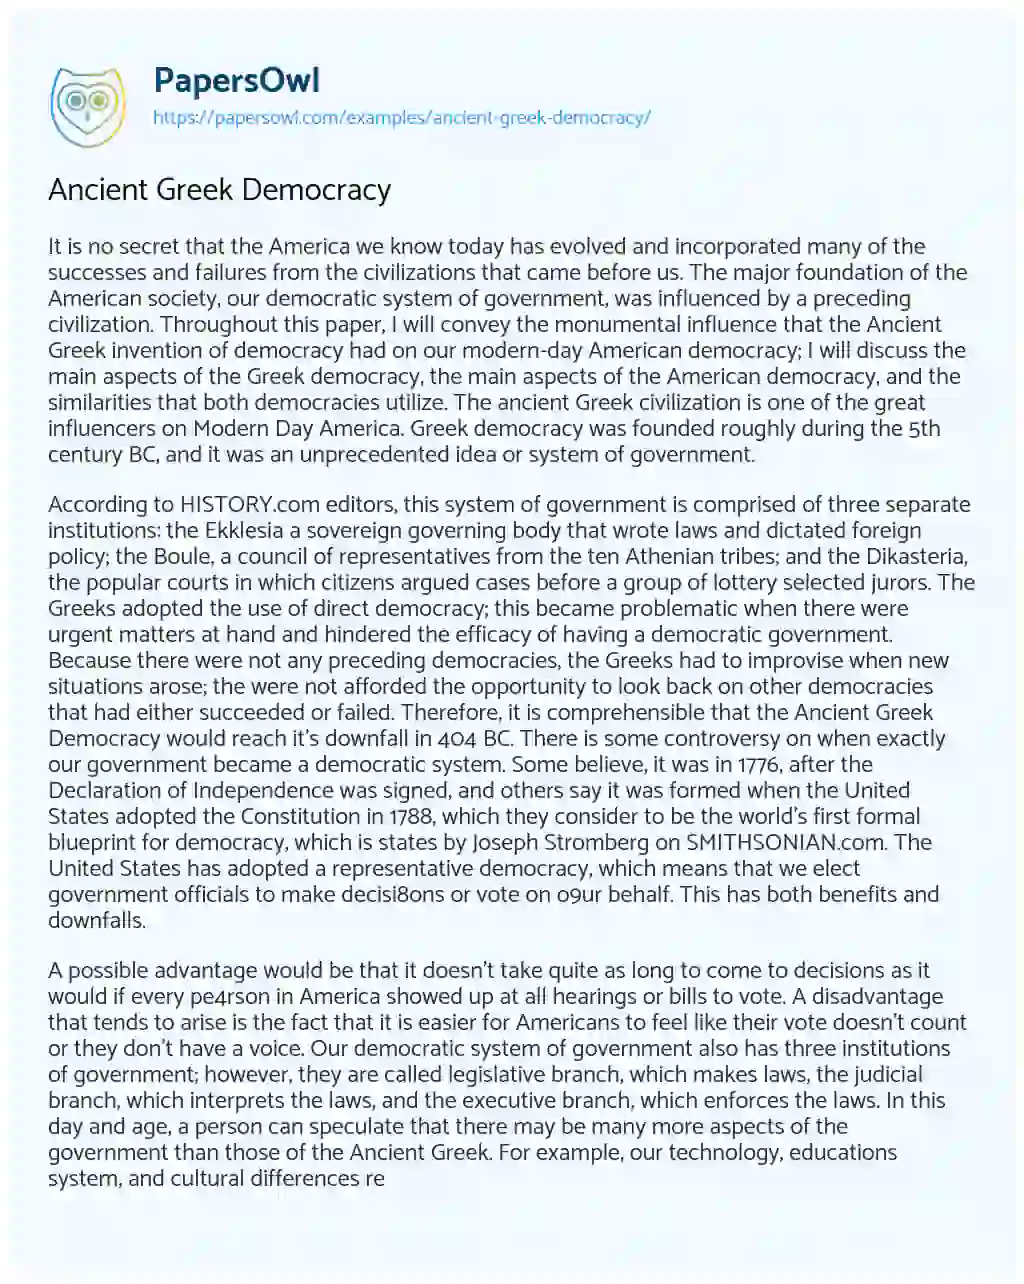 Essay on Ancient Greek Democracy